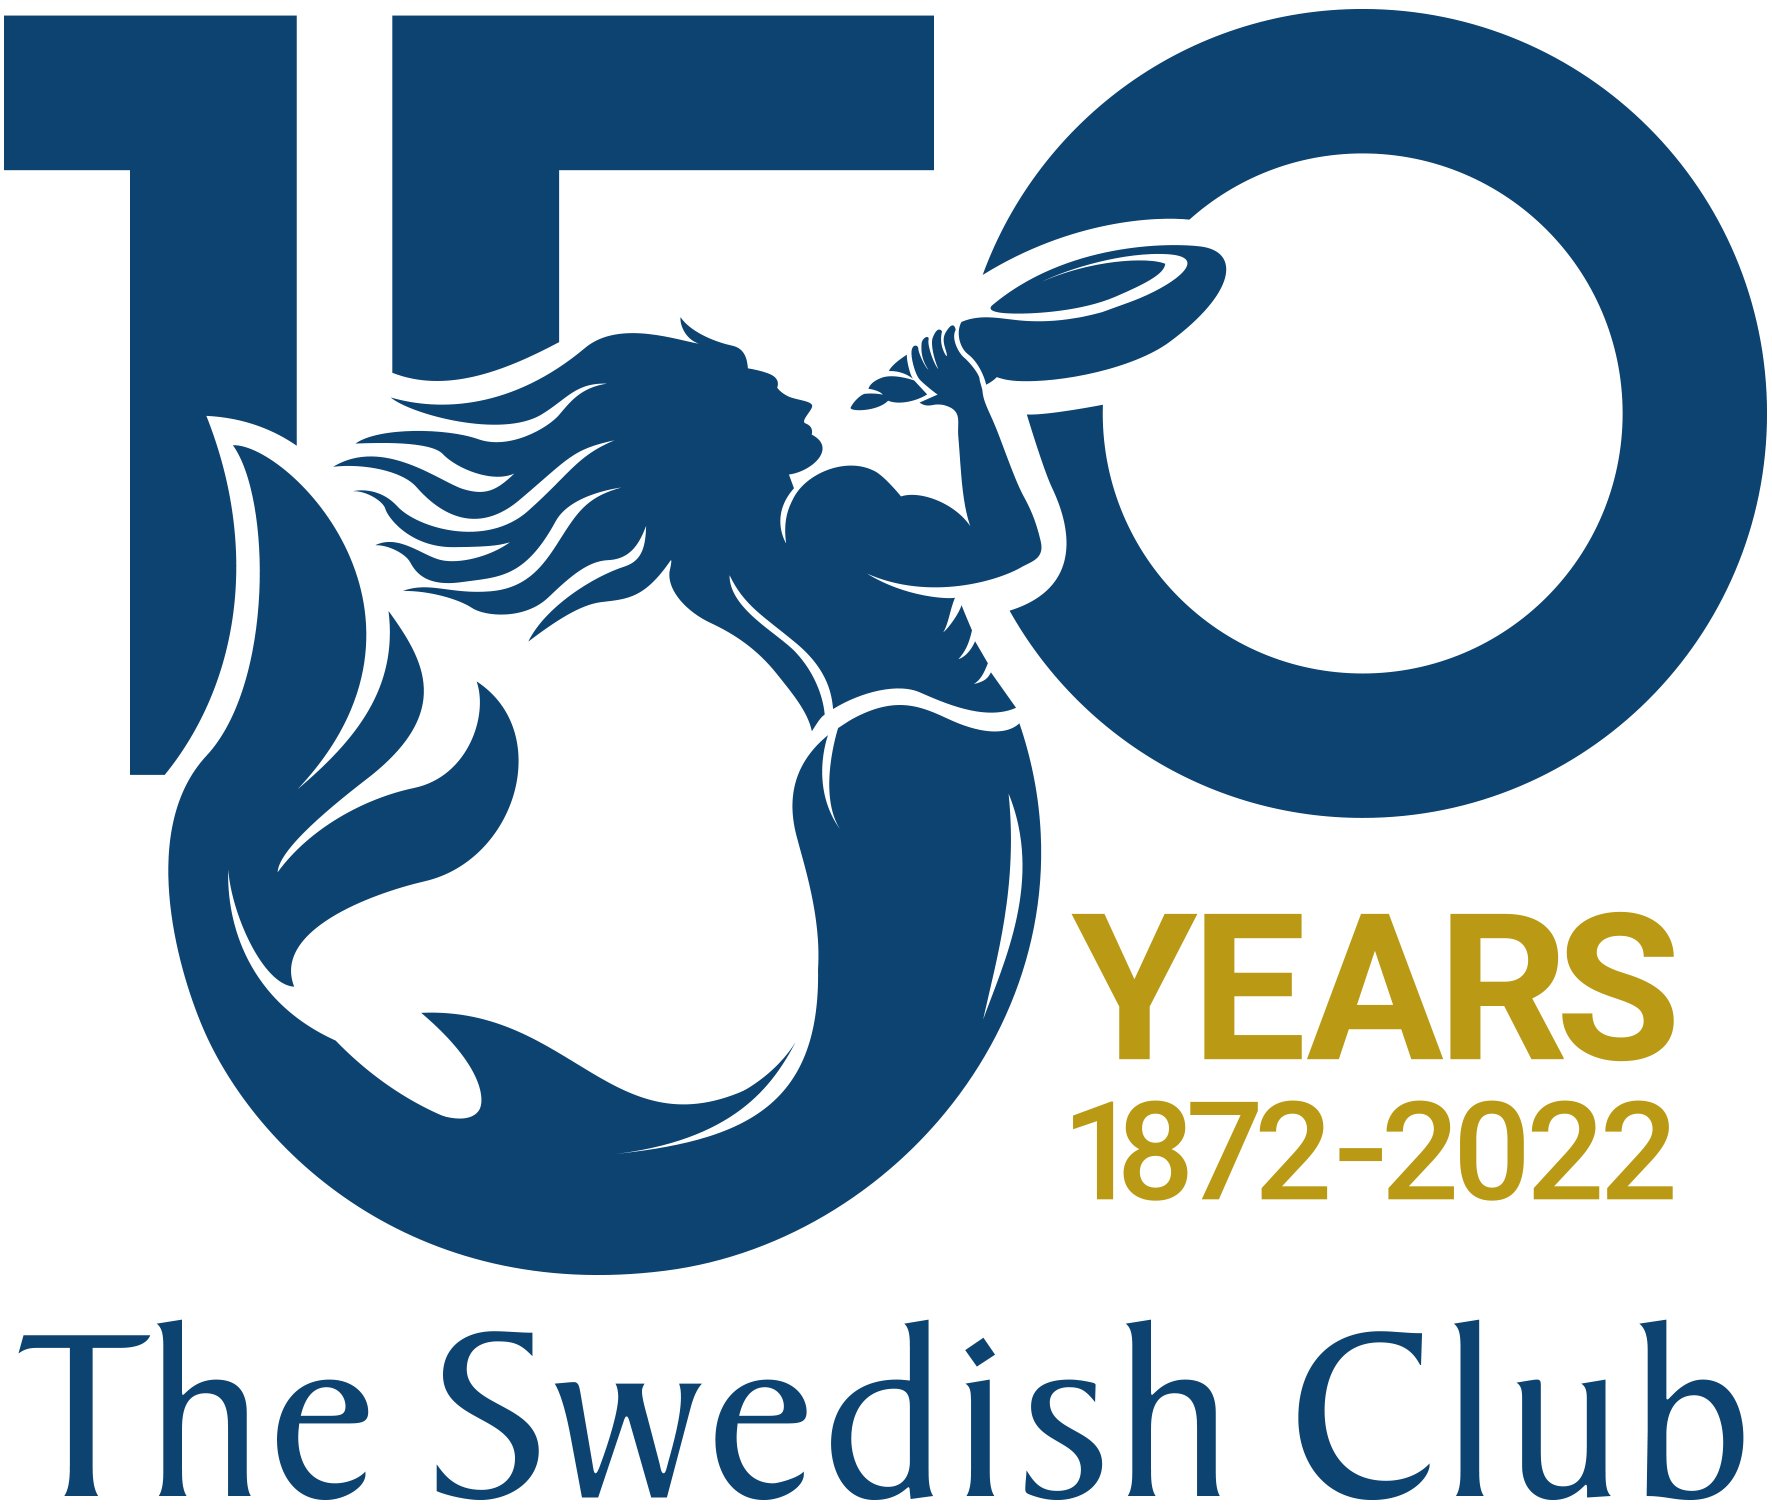 The Swedish Club